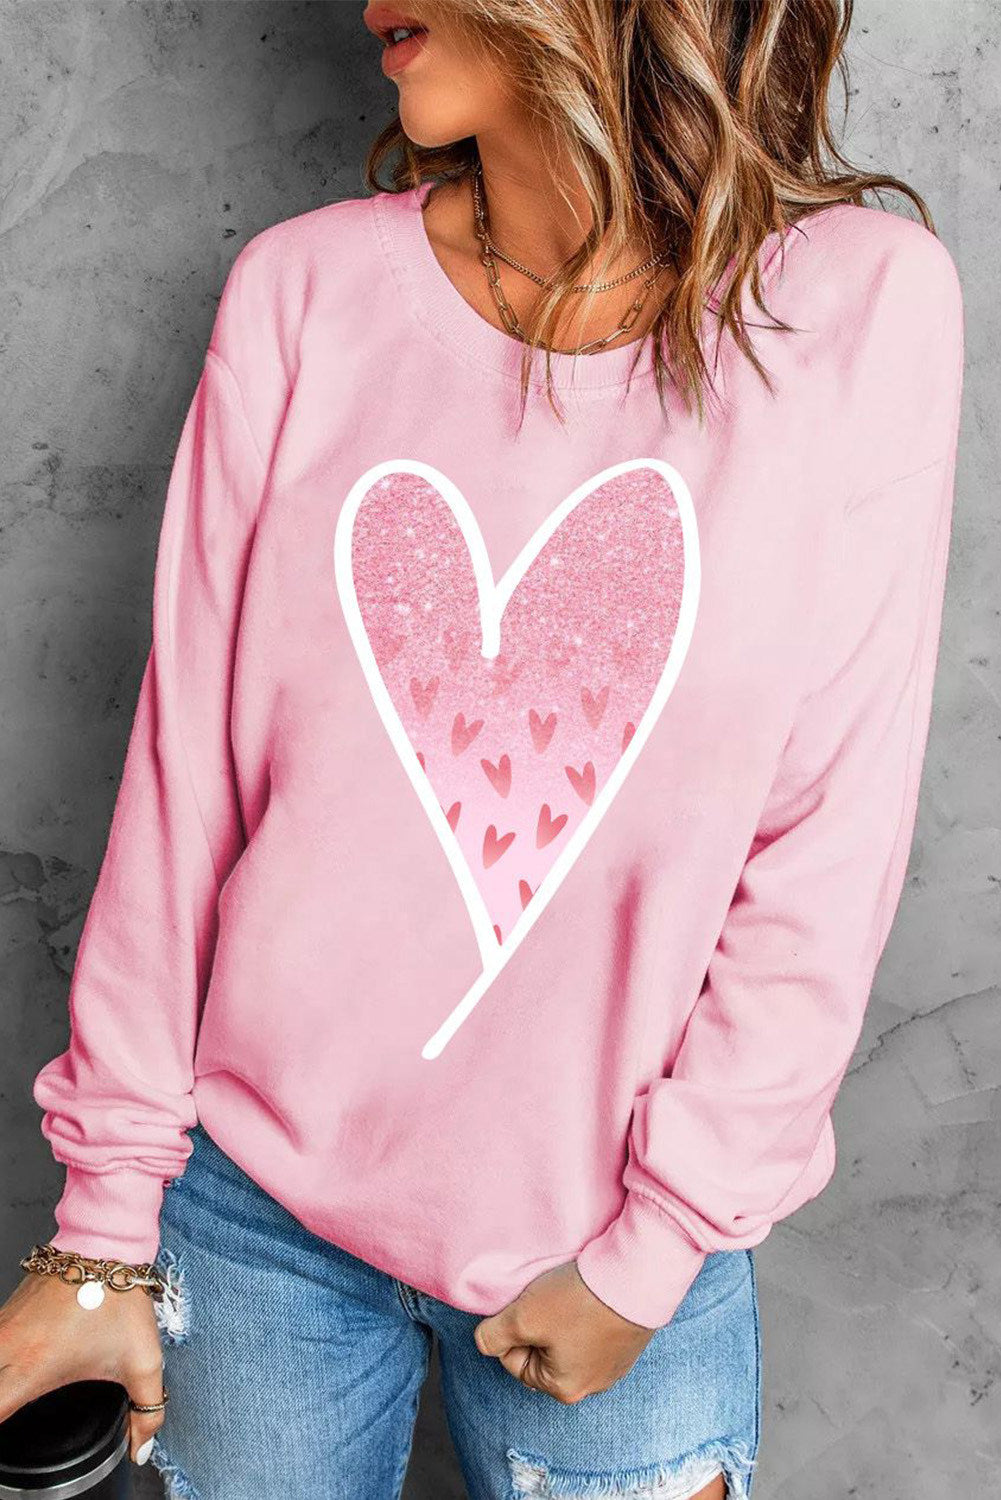 LC25314108-10-S, LC25314108-10-M, LC25314108-10-L, LC25314108-10-XL, LC25314108-10-2XL, Pink Valentines Day Shirts Glitter Heart Graphic Sweatshirt for Women